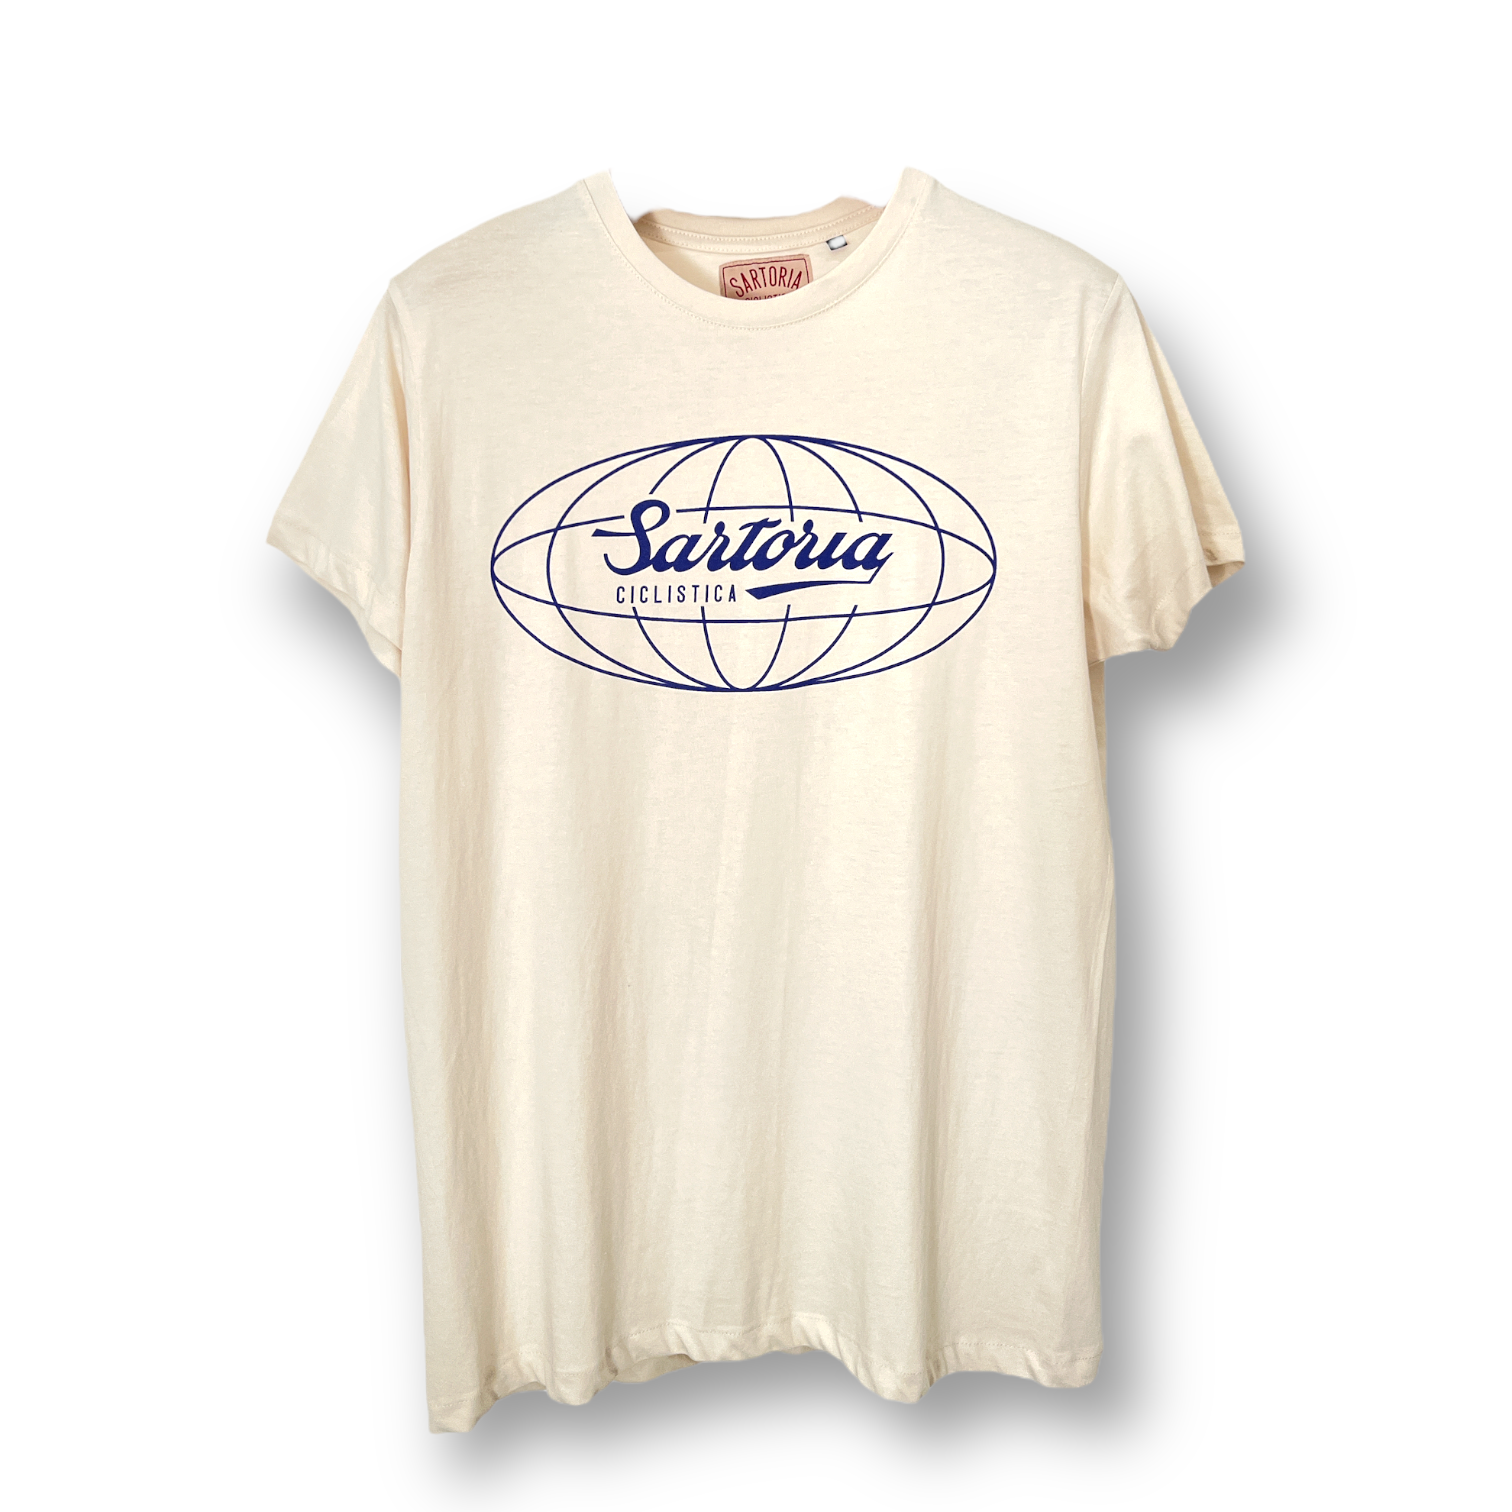 Organic Cotton Tshirt - Back in the 50' Sartoria Ciclistica - Unisex